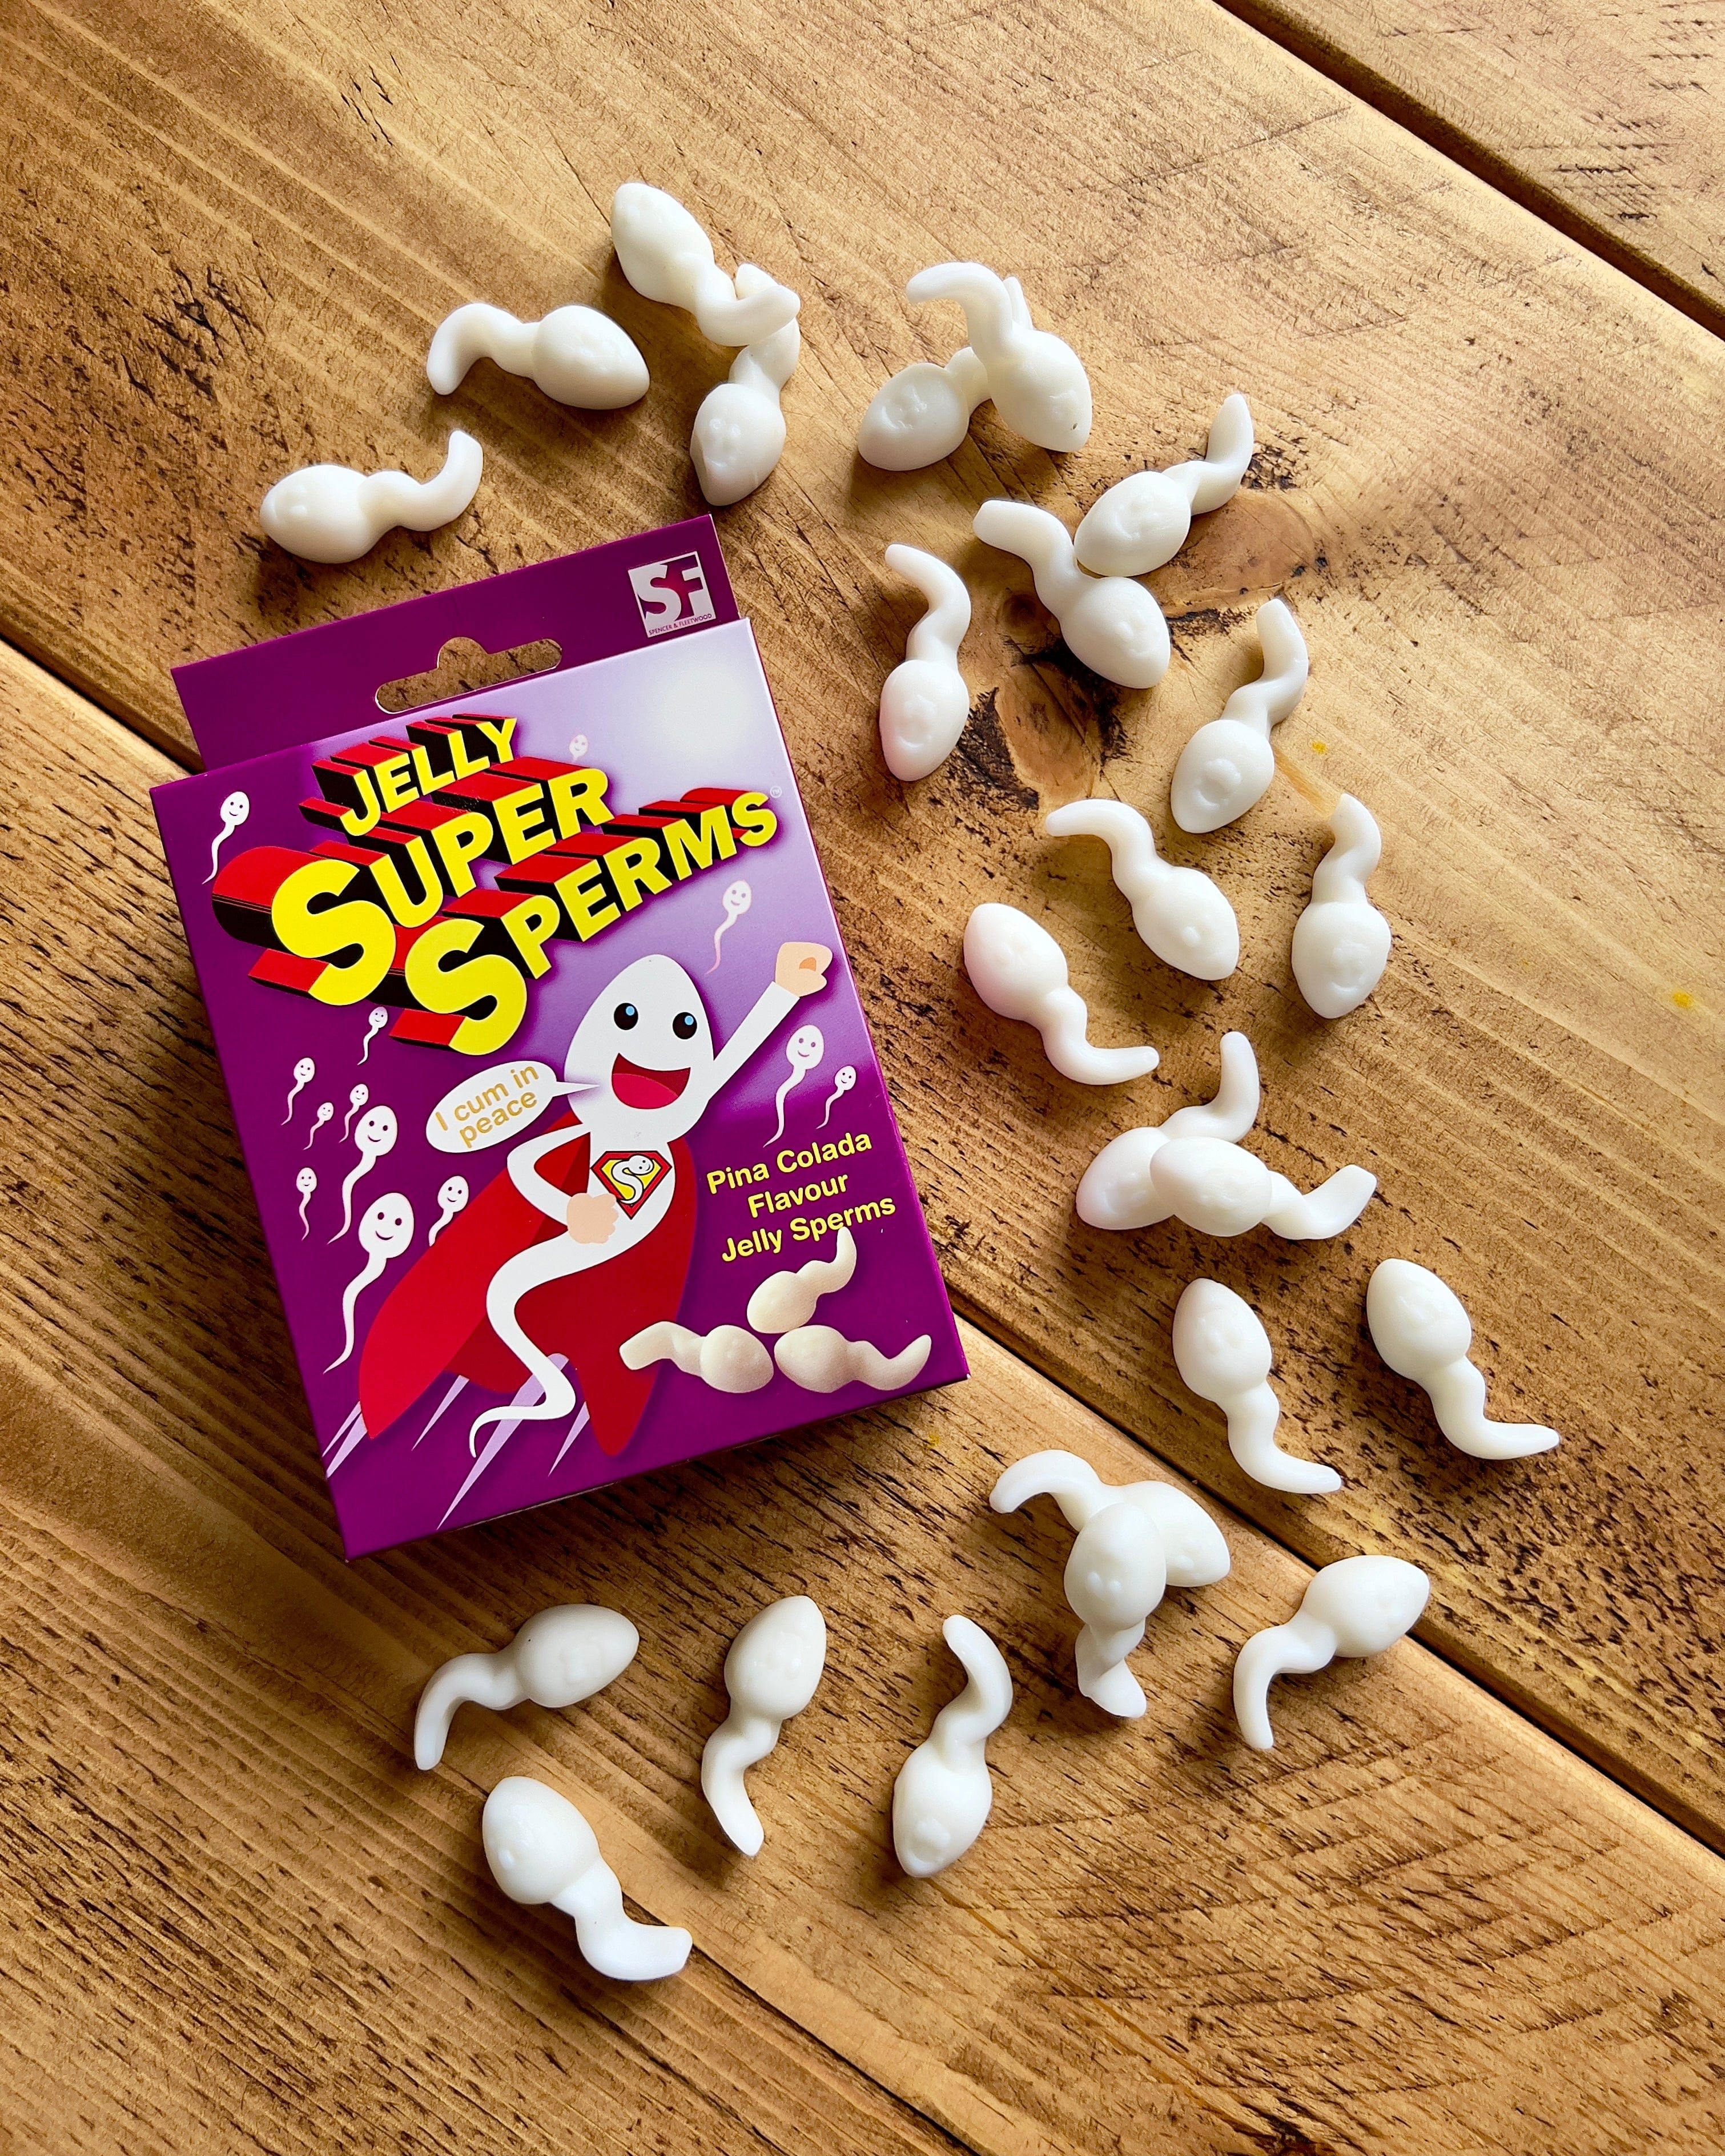 Jelly Super Sperm